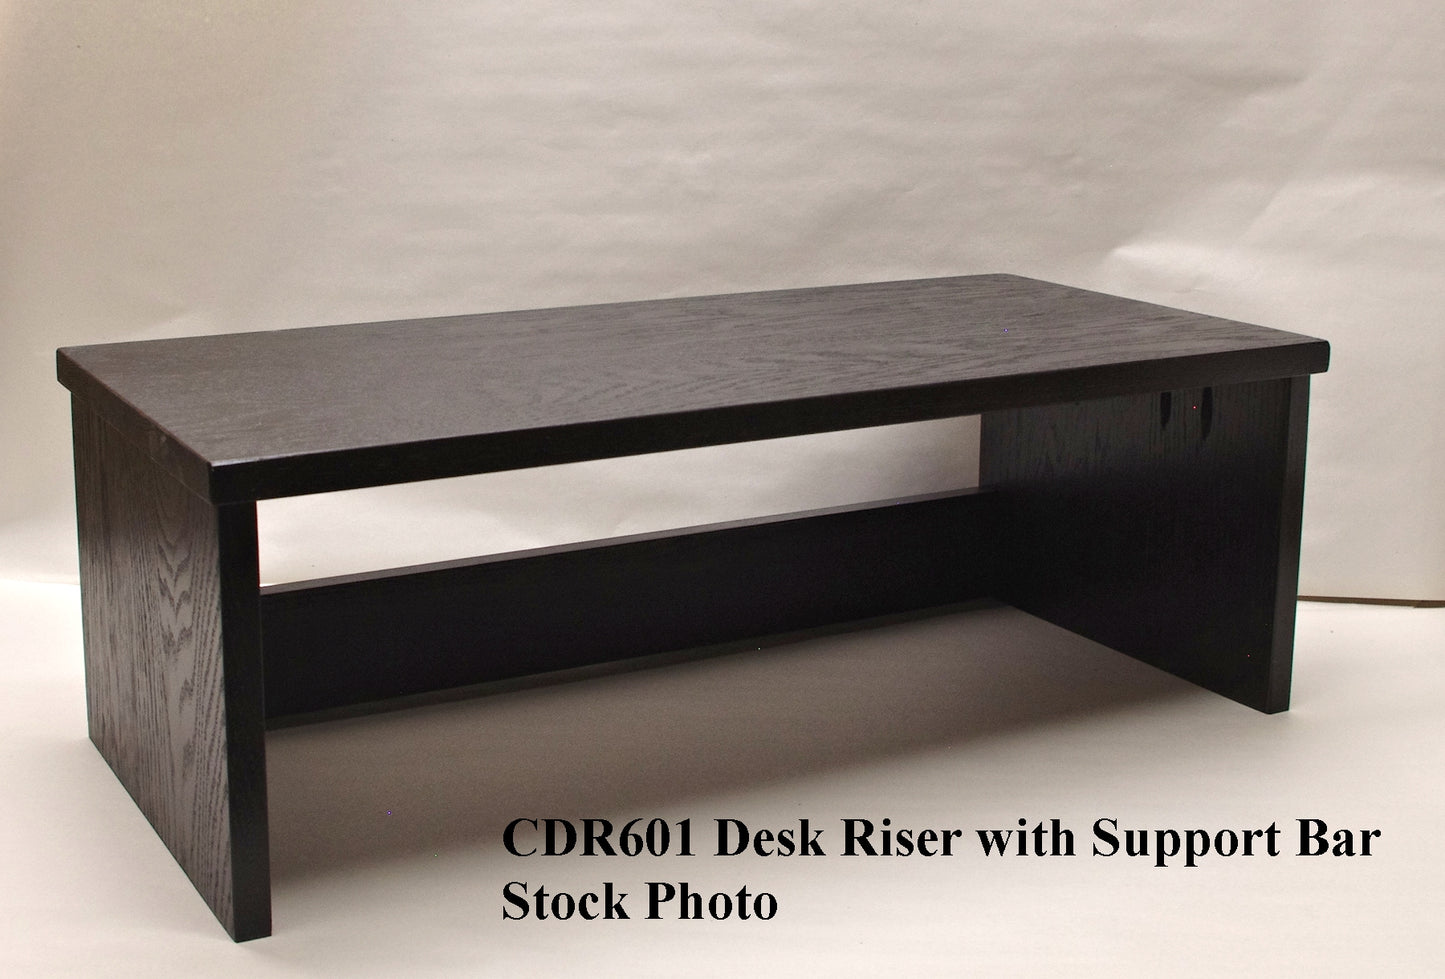 CDR601 Desk Riser with Support Bar - 28" Length